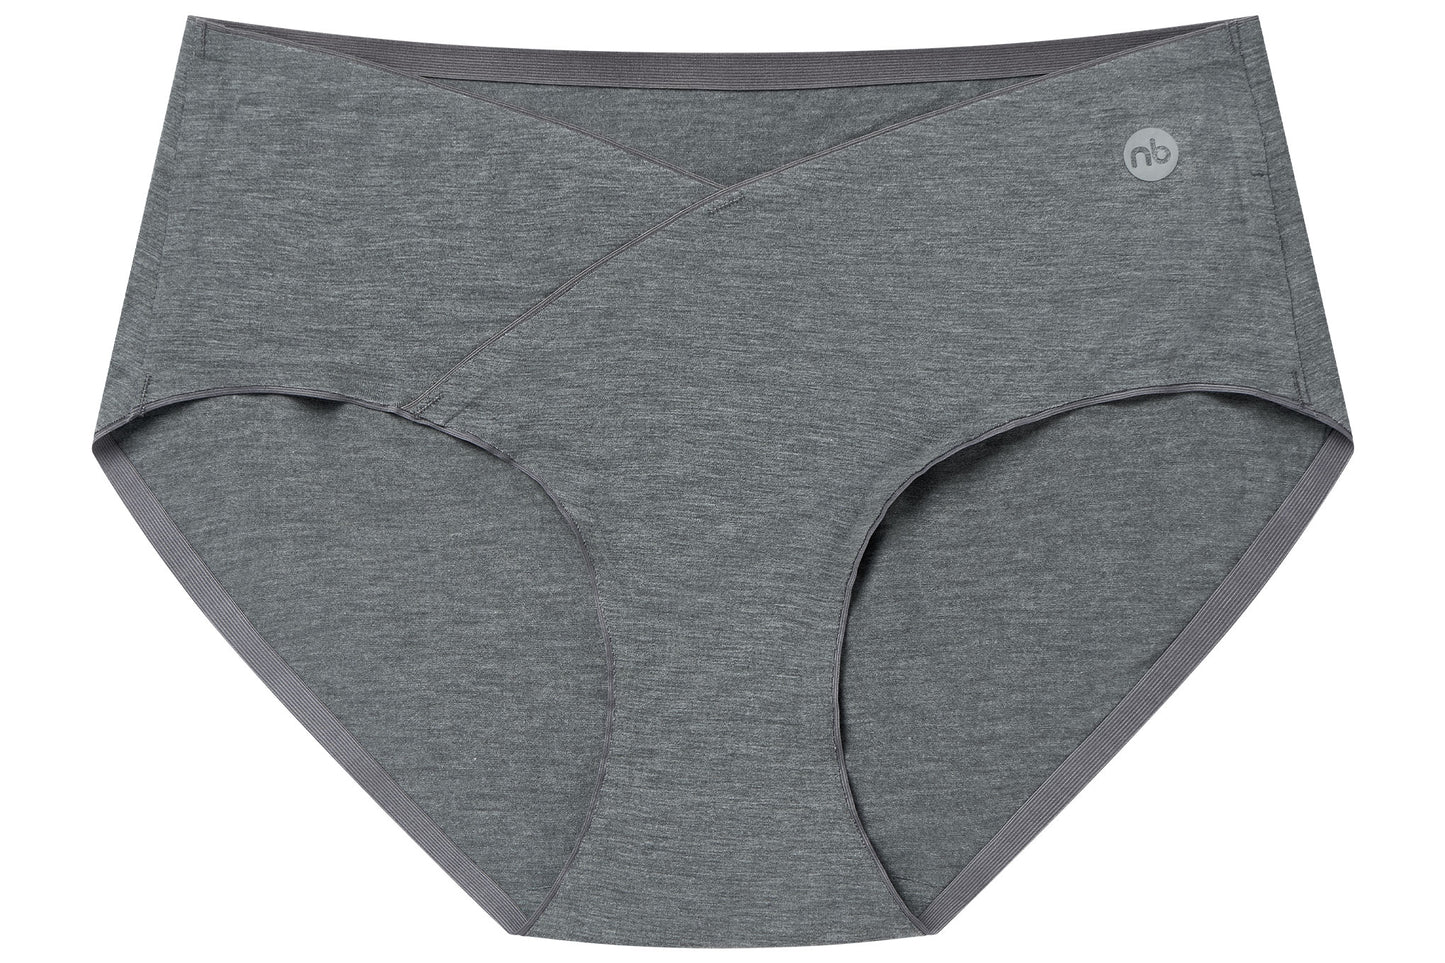 Women's Basics Crossover Bikini Underwear (Bamboo Spandex, 2 Pack) - Charcoal and Grey Dusk